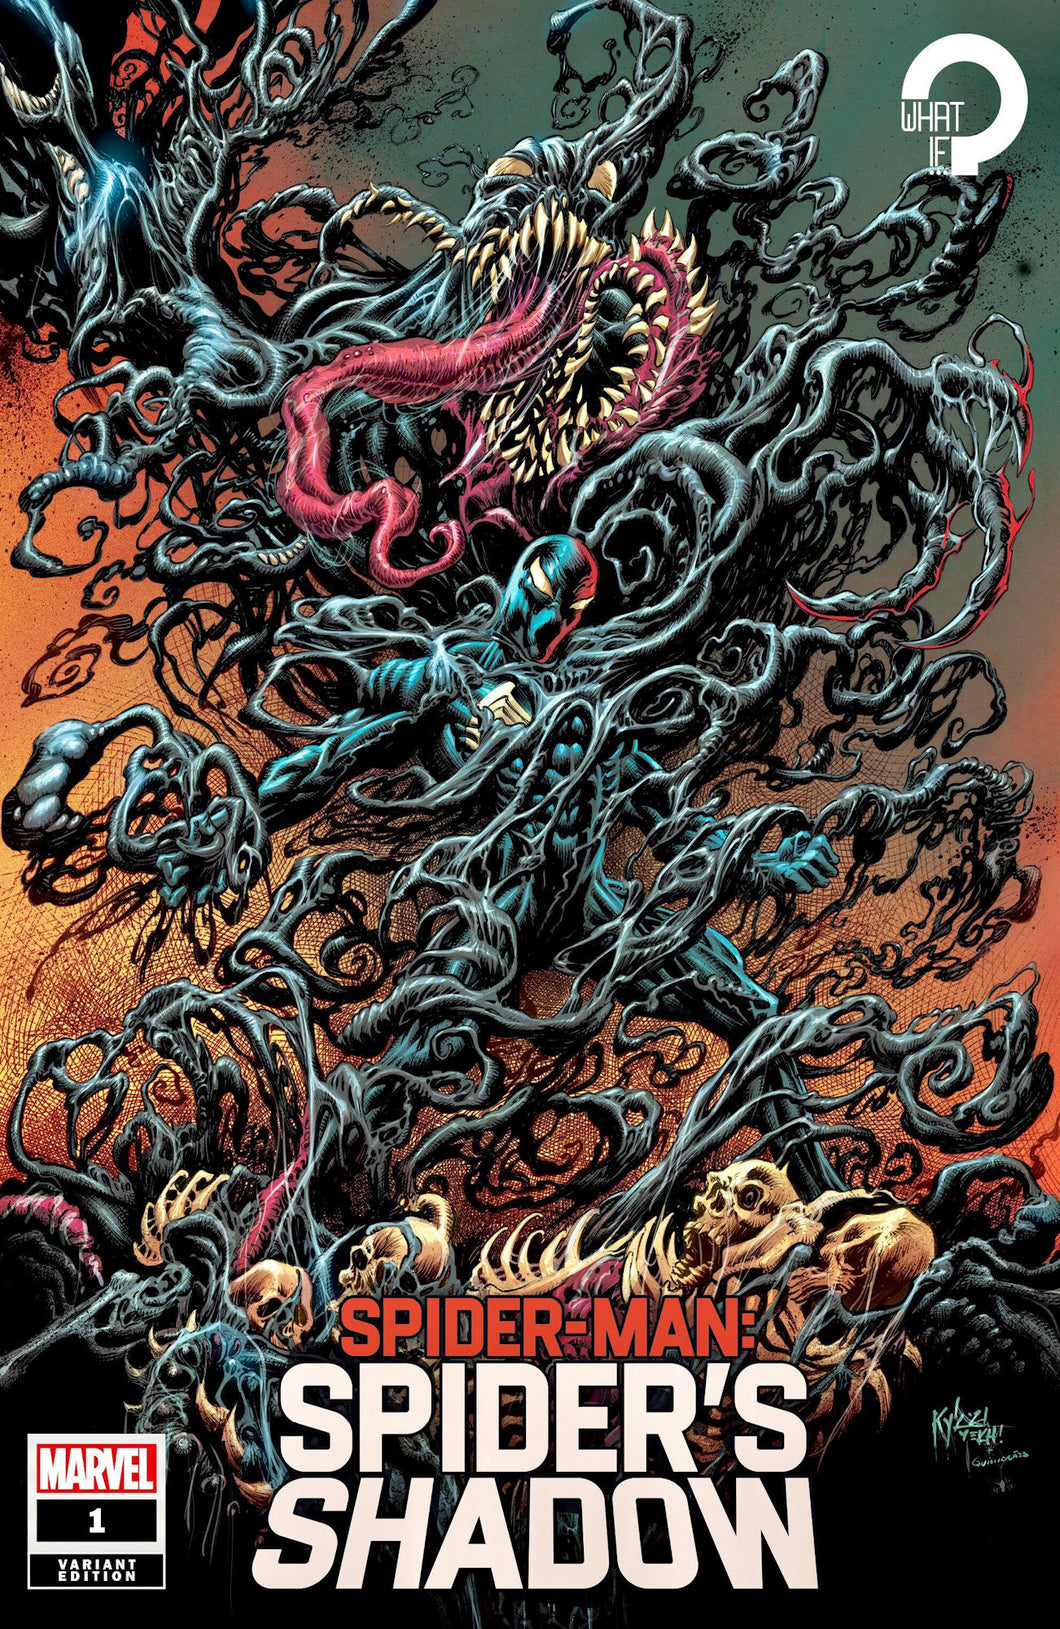 SPIDER-MAN: SPIDER'S SHADOW #1 (KYLE HOTZ EXCLUSIVE TRADE VARIANT) Comic ~ Marvel Comics